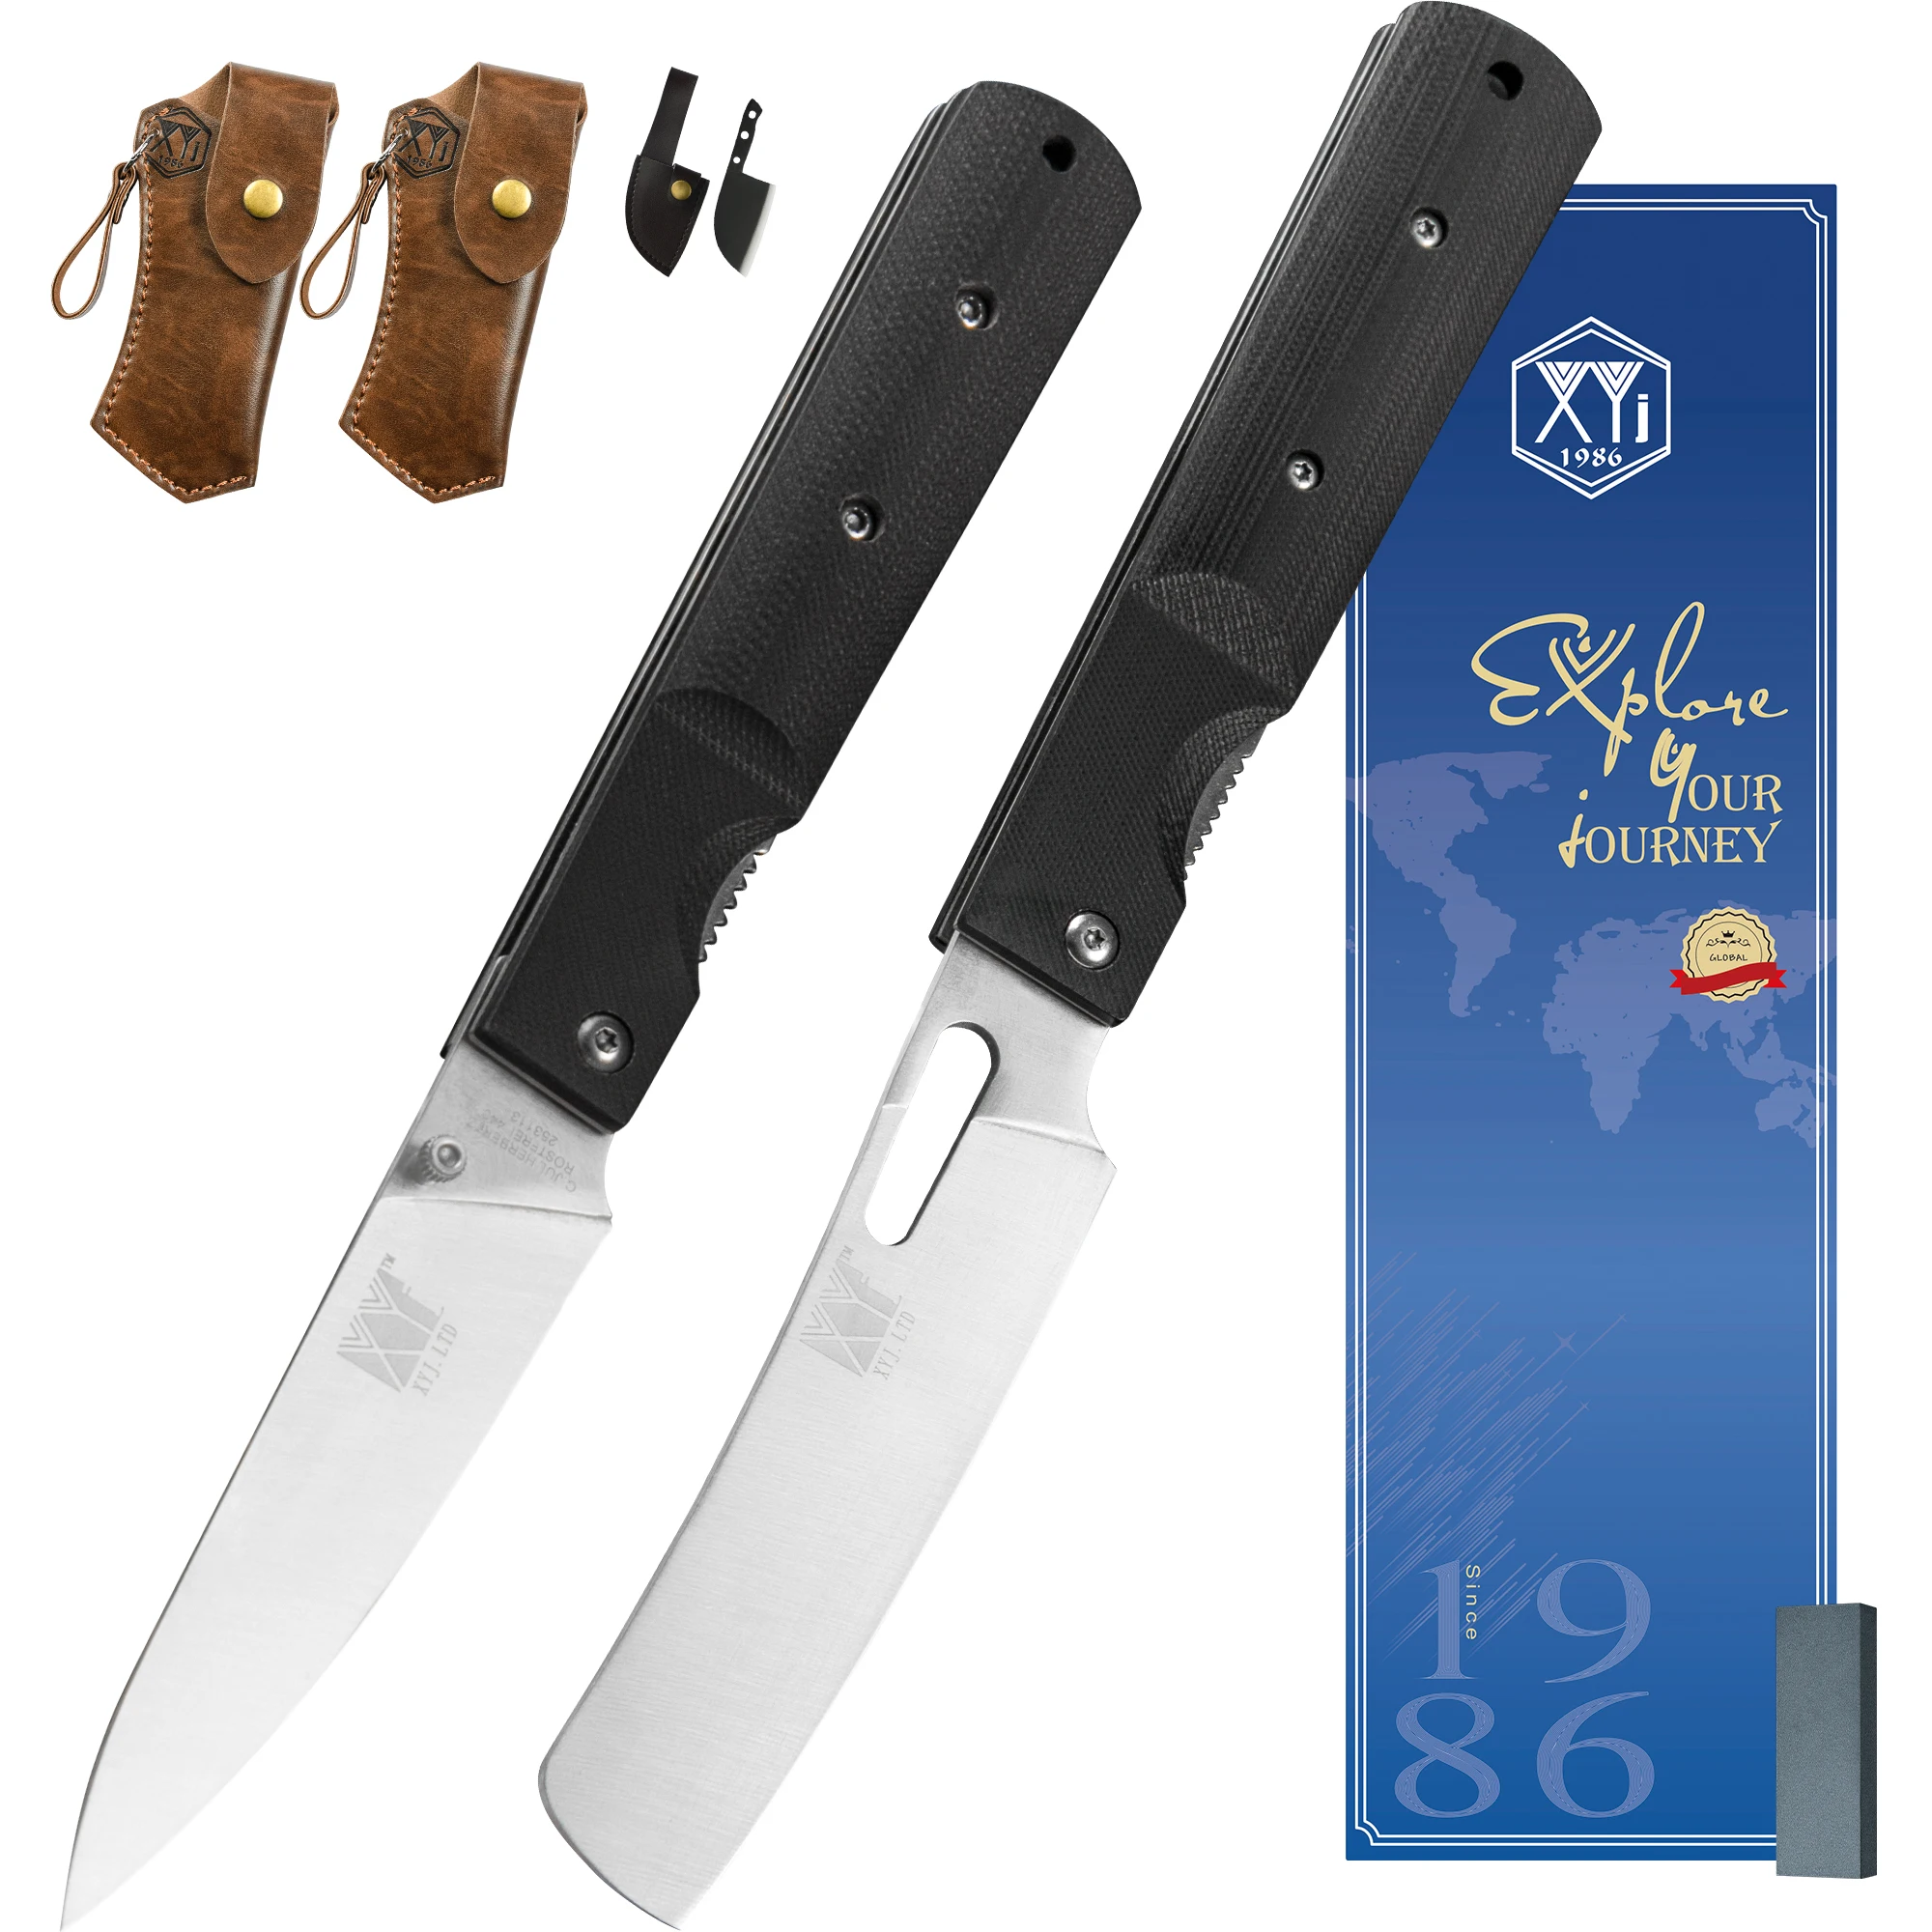 Stainless Steel Folding Knives Cleaver Knife Plastic Handle Kitchen Slicer Paring Knife  Belt Tied Pocket Carry Bag Accessory